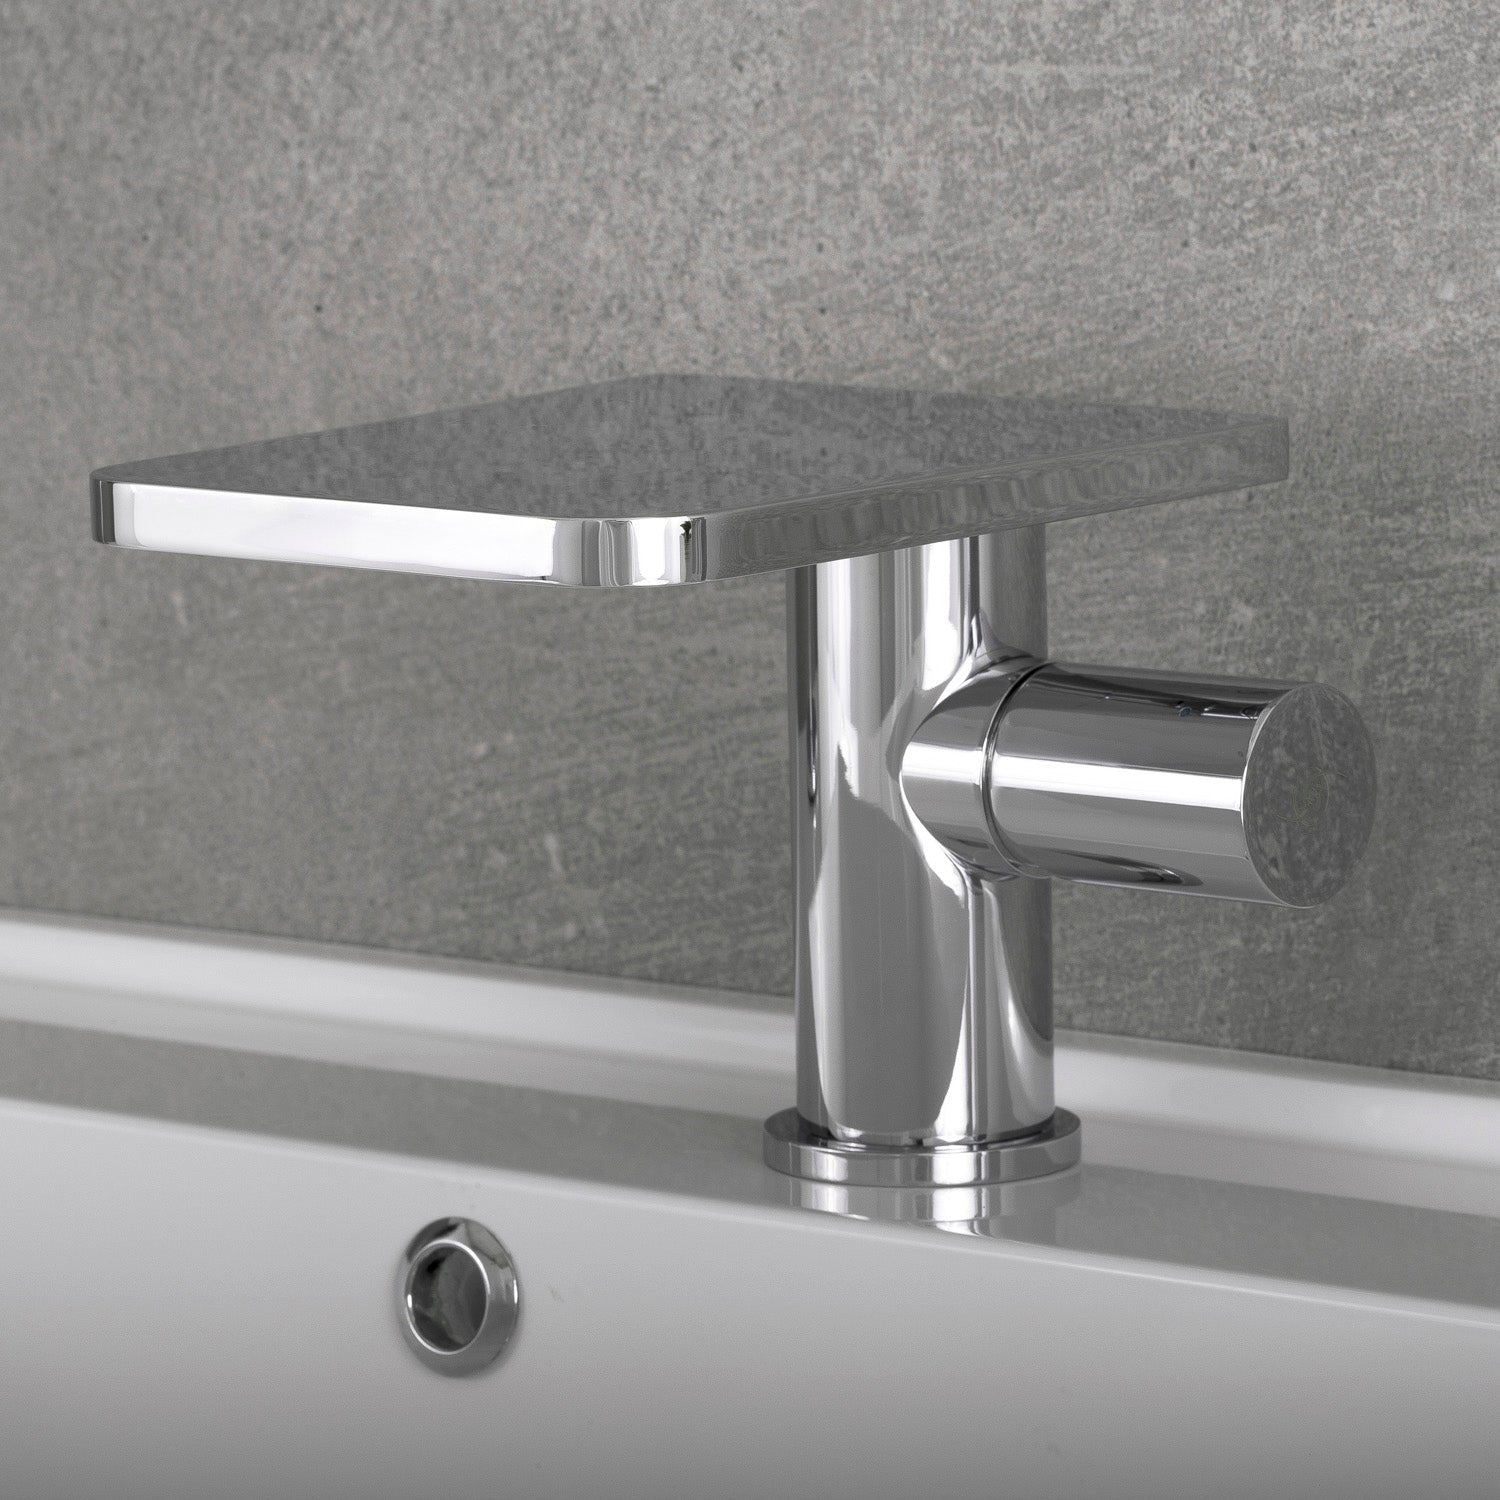 DAX Single Handle Waterfall Bathroom Faucet, Brass Body, Chrome Finish, 5-5/16 x 4-5/16 Inches (DAX-9888)